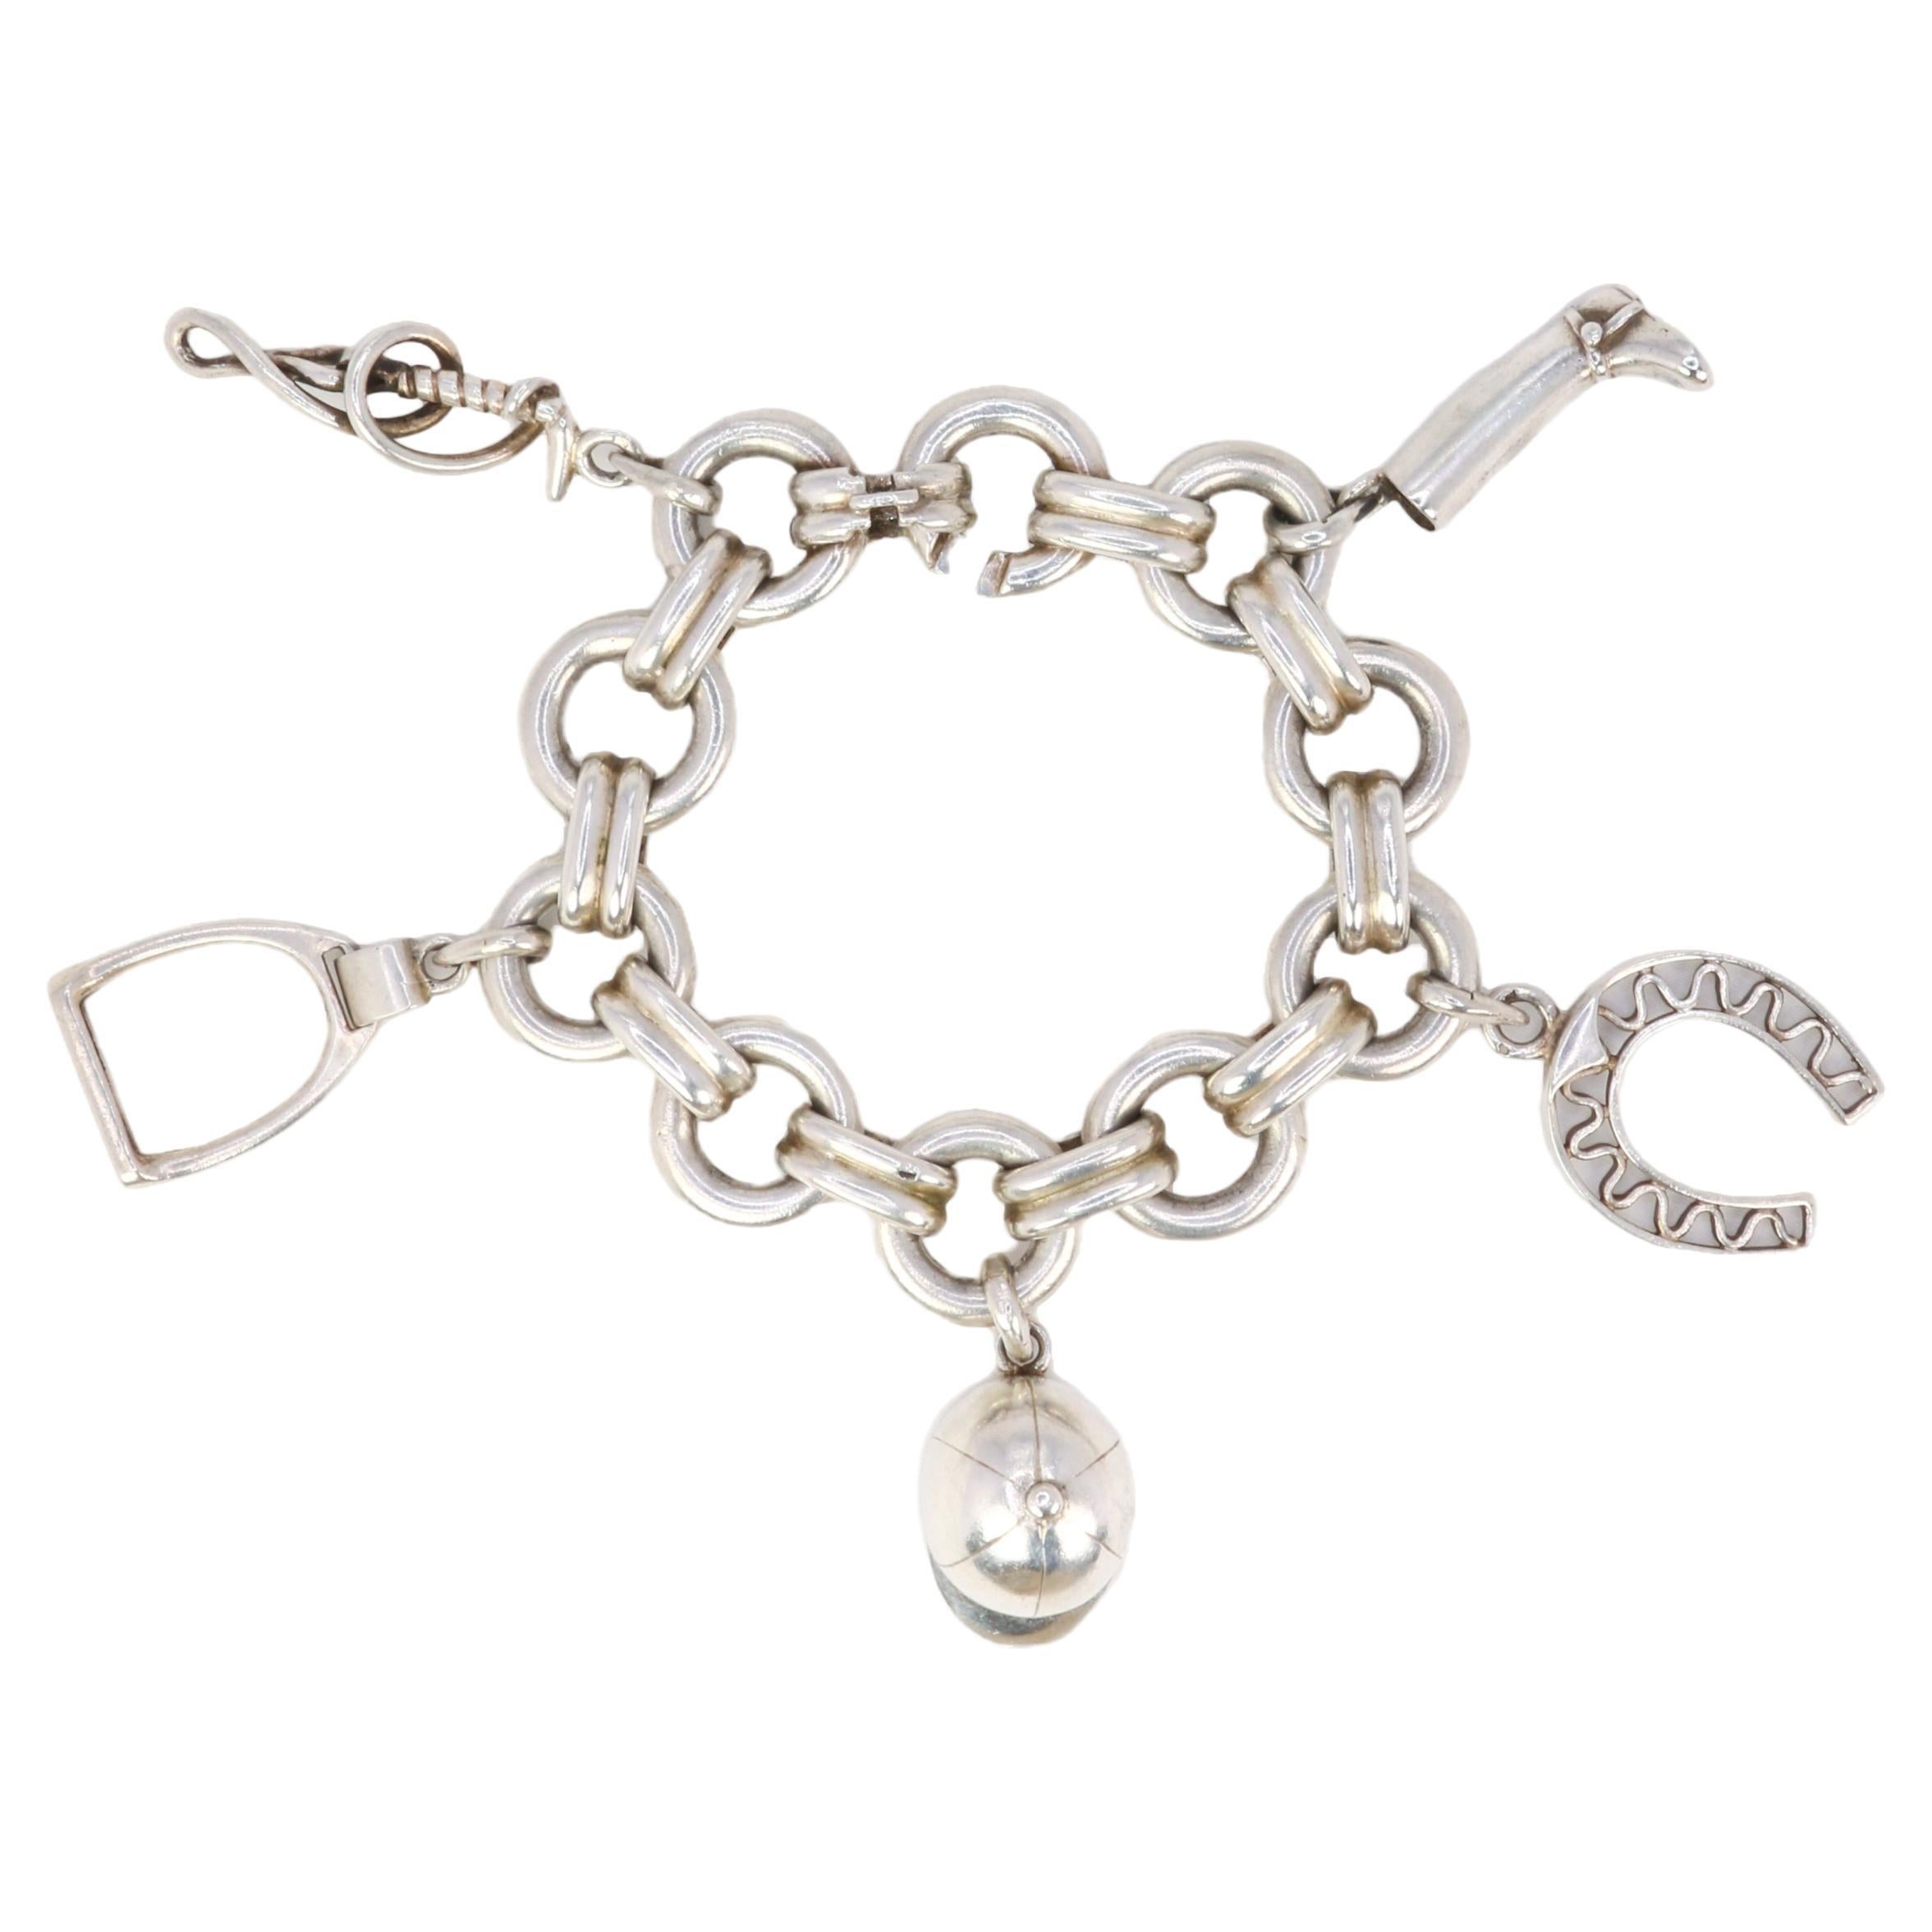 Gaétan de Percin (att. to HERMES) Silver bracelet and equestrian charms  For Sale